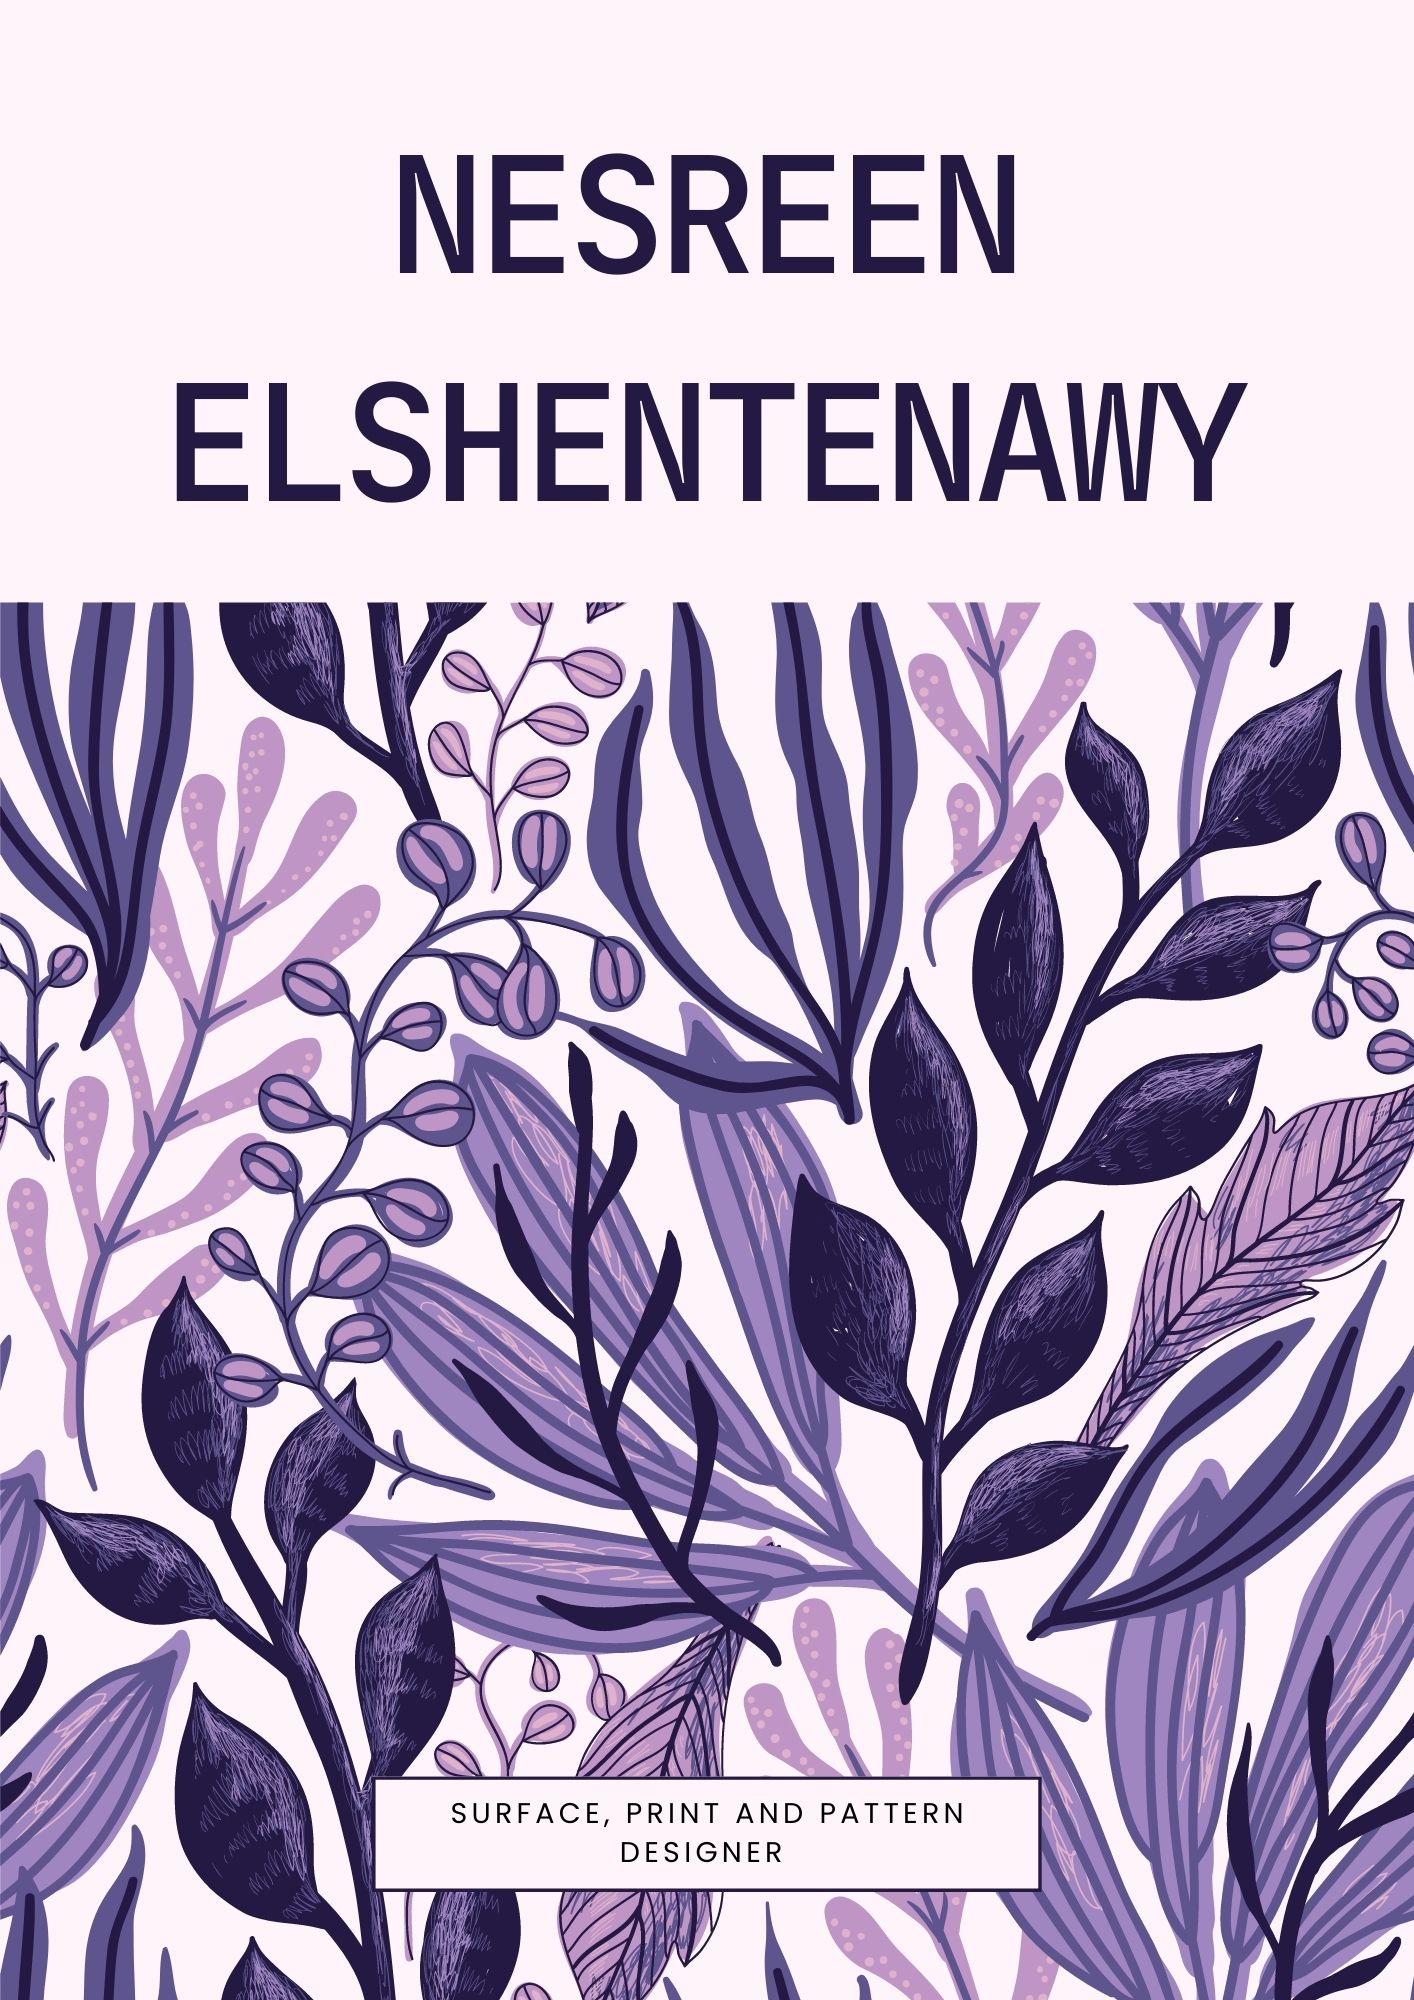 Nesreen Elshentenawy